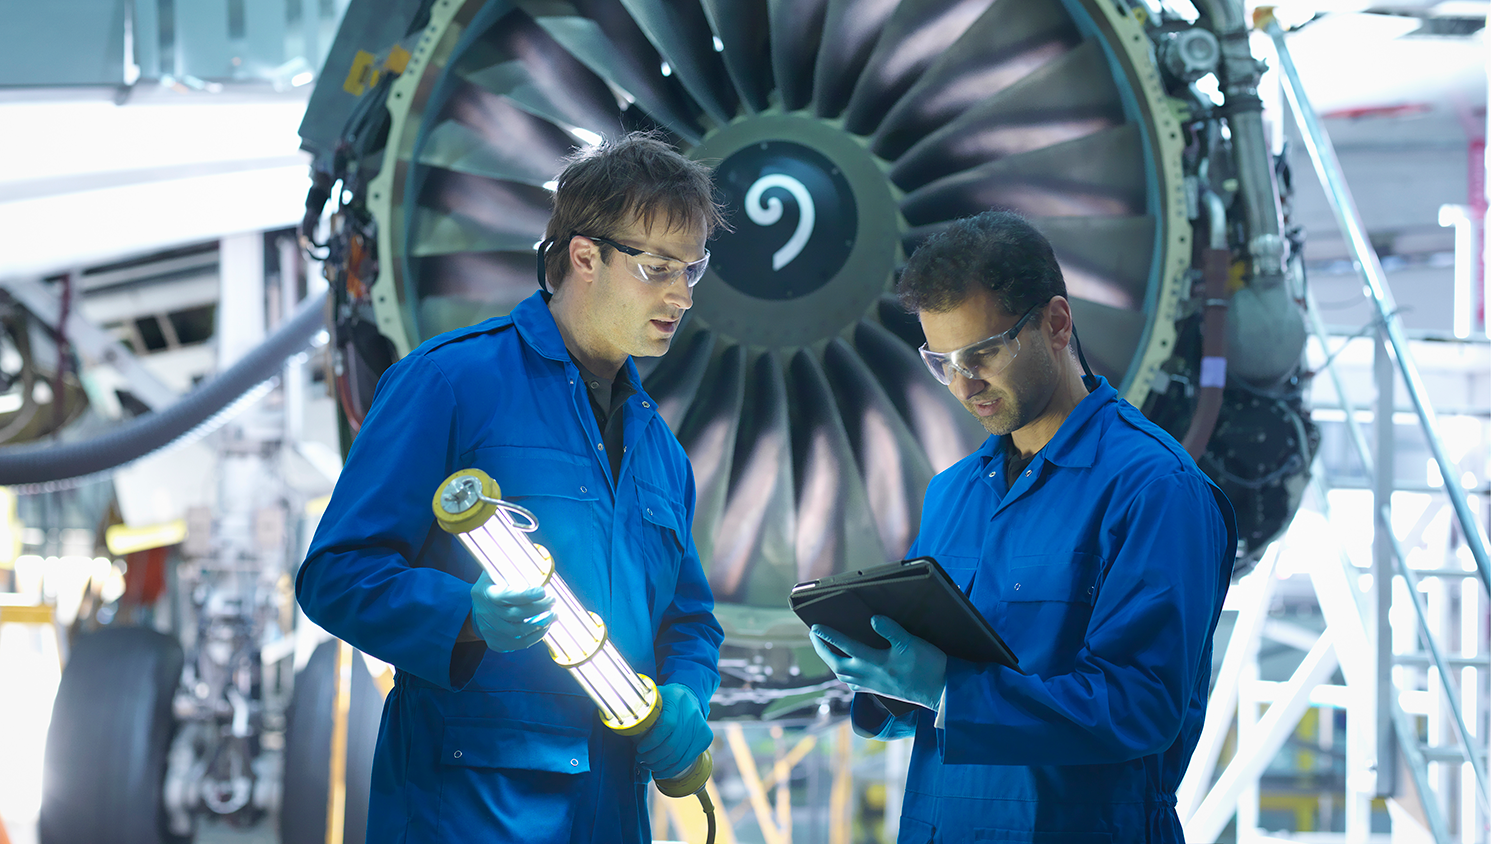 Imagen de stock de dos científicos en un taller mecánico revisando información en una tableta